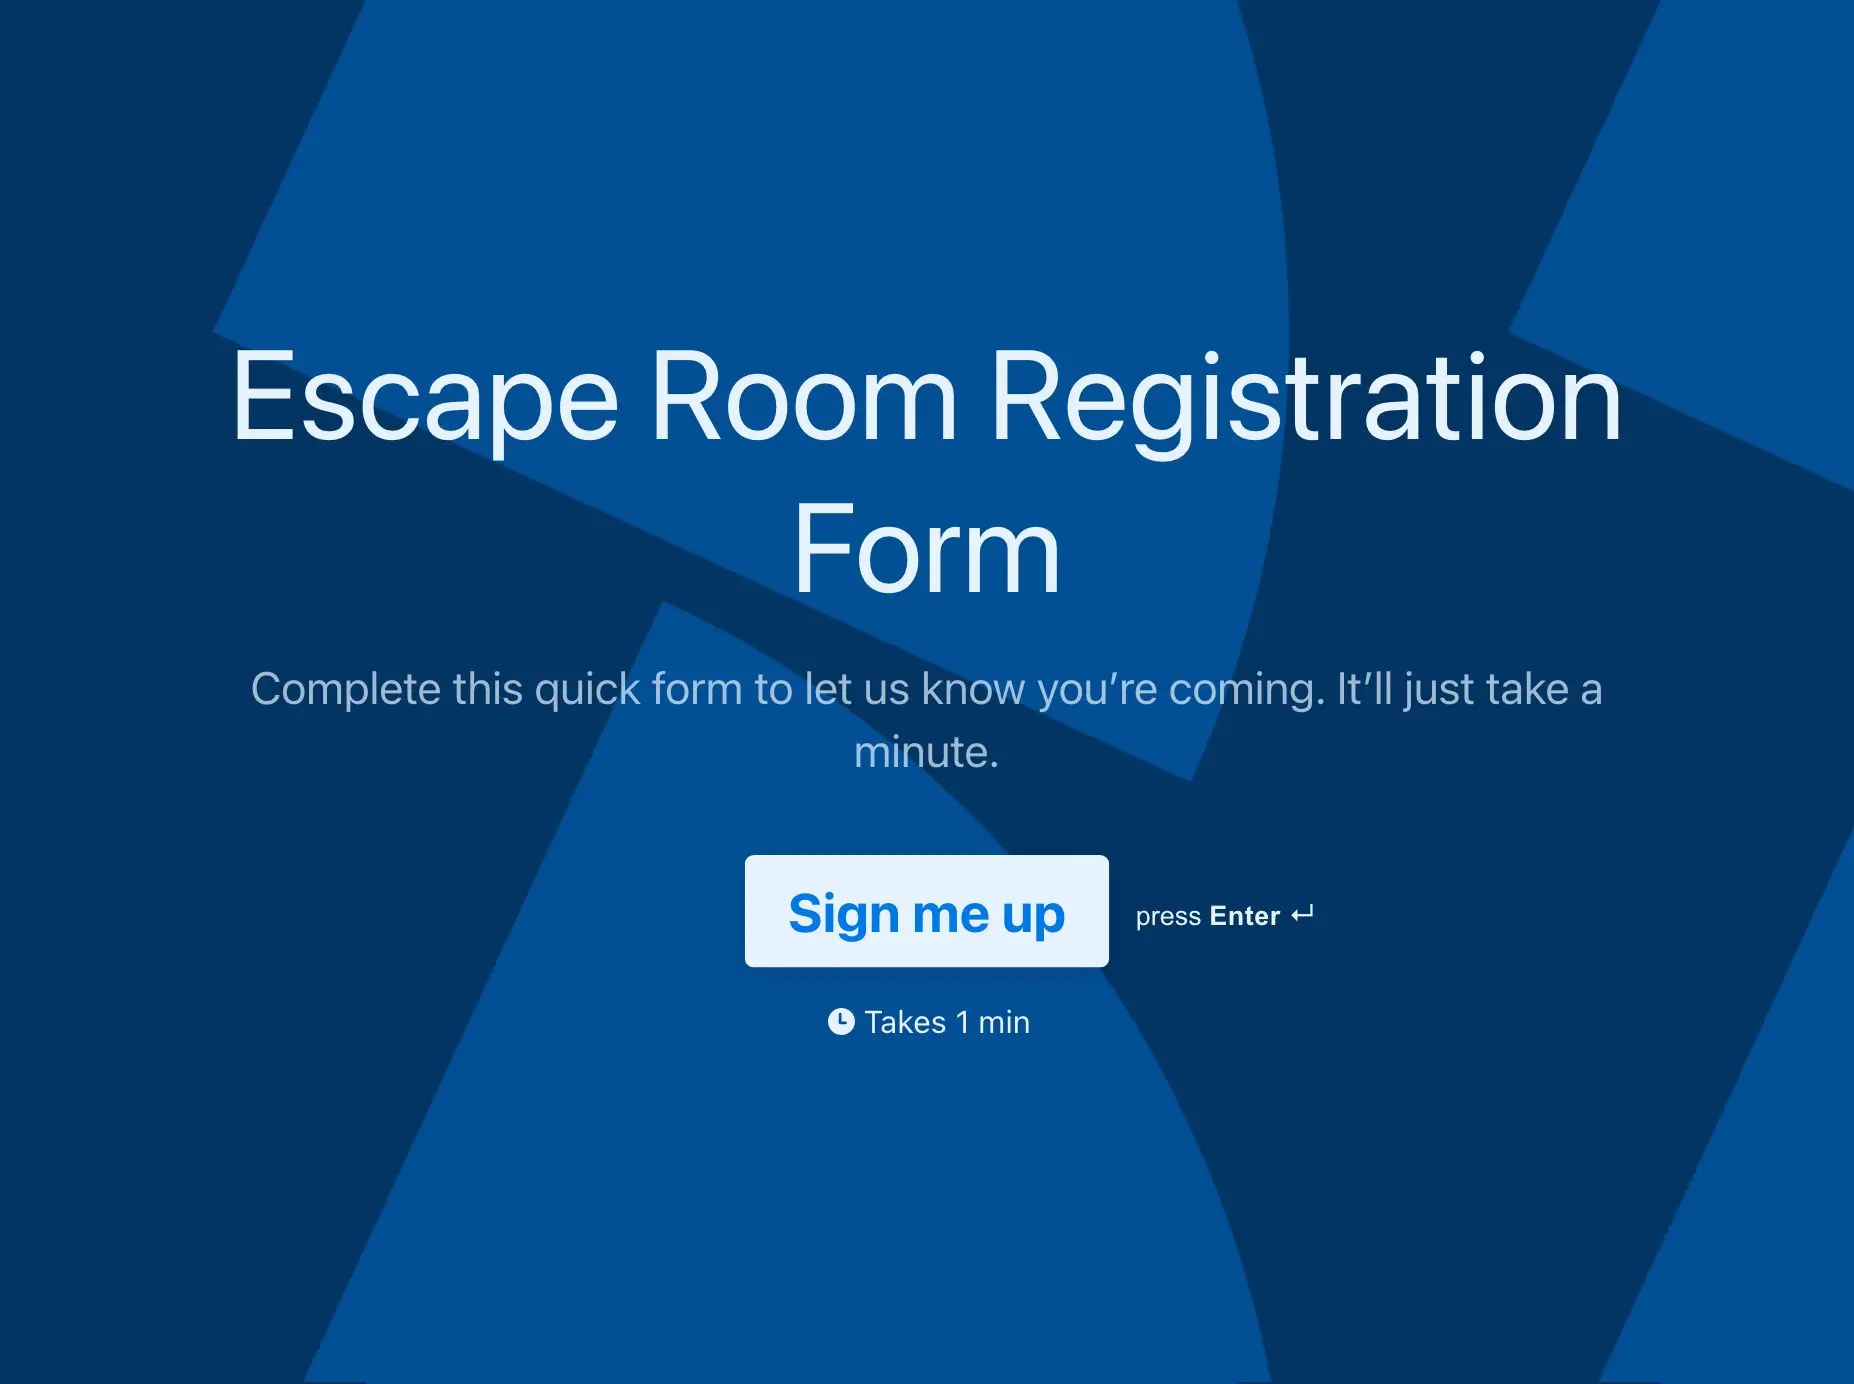 Escape Room Registration Form Template Hero